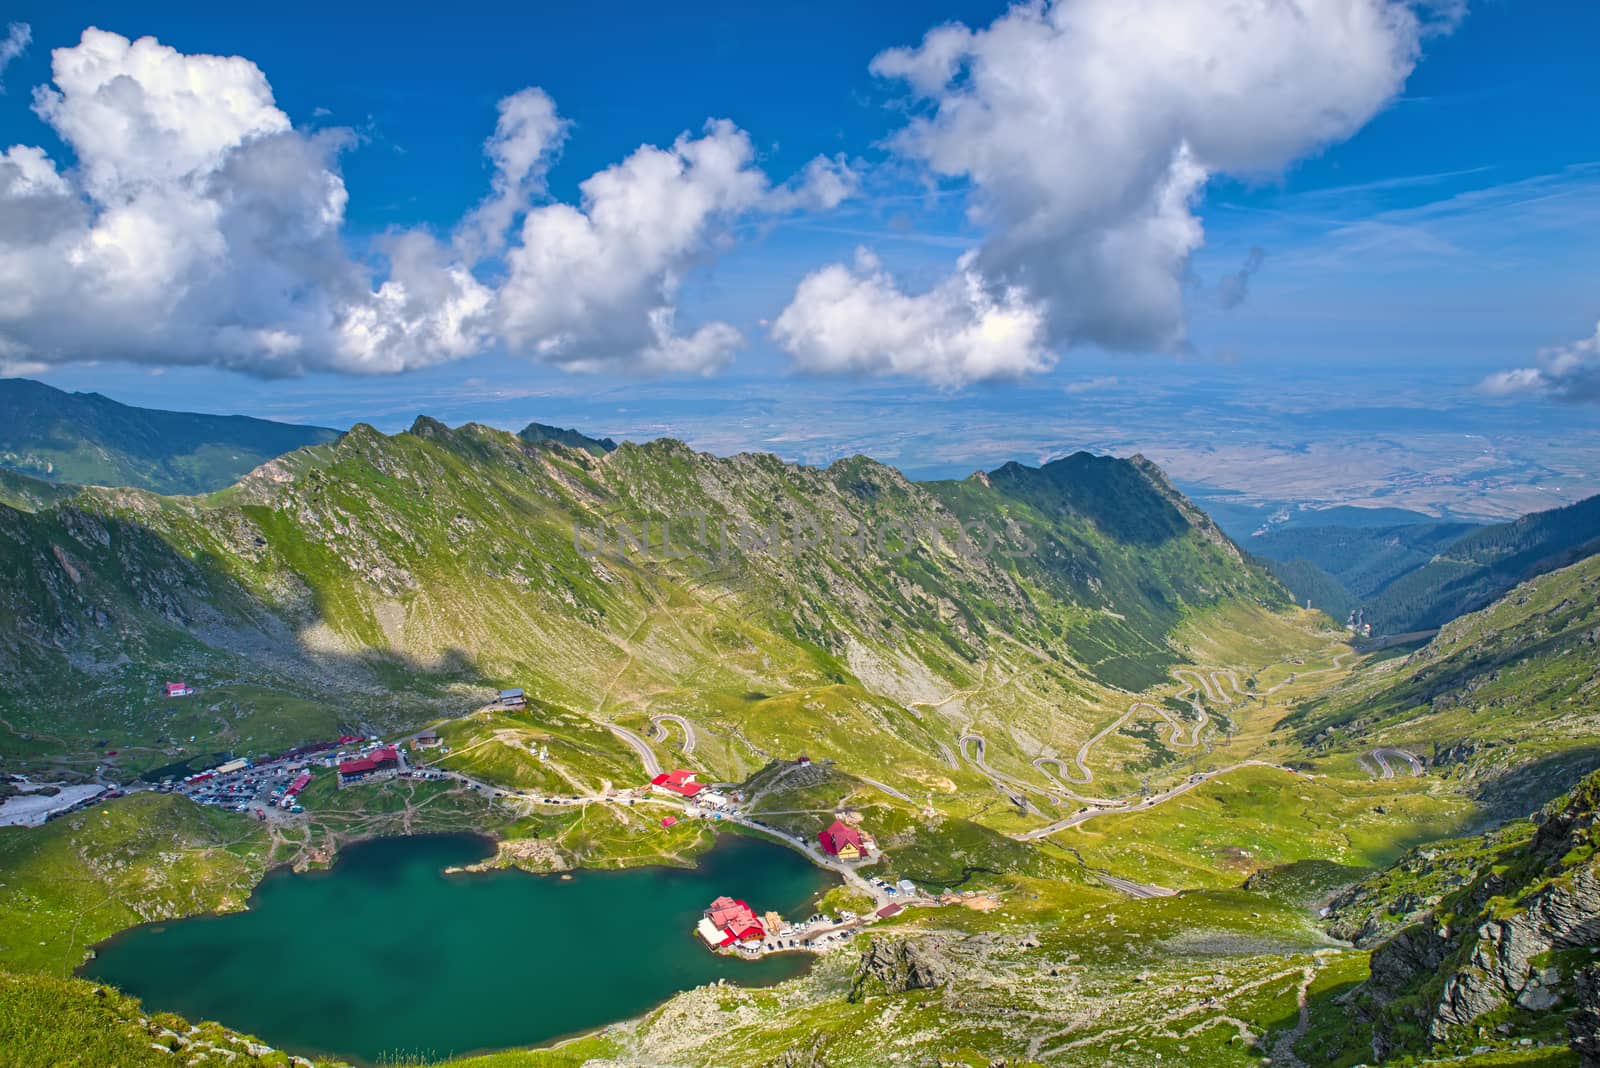 Balea lake and Transfagarasan road seen from above in the summer, landscape in Romanian Carpathians, Fagaras rocky mountains